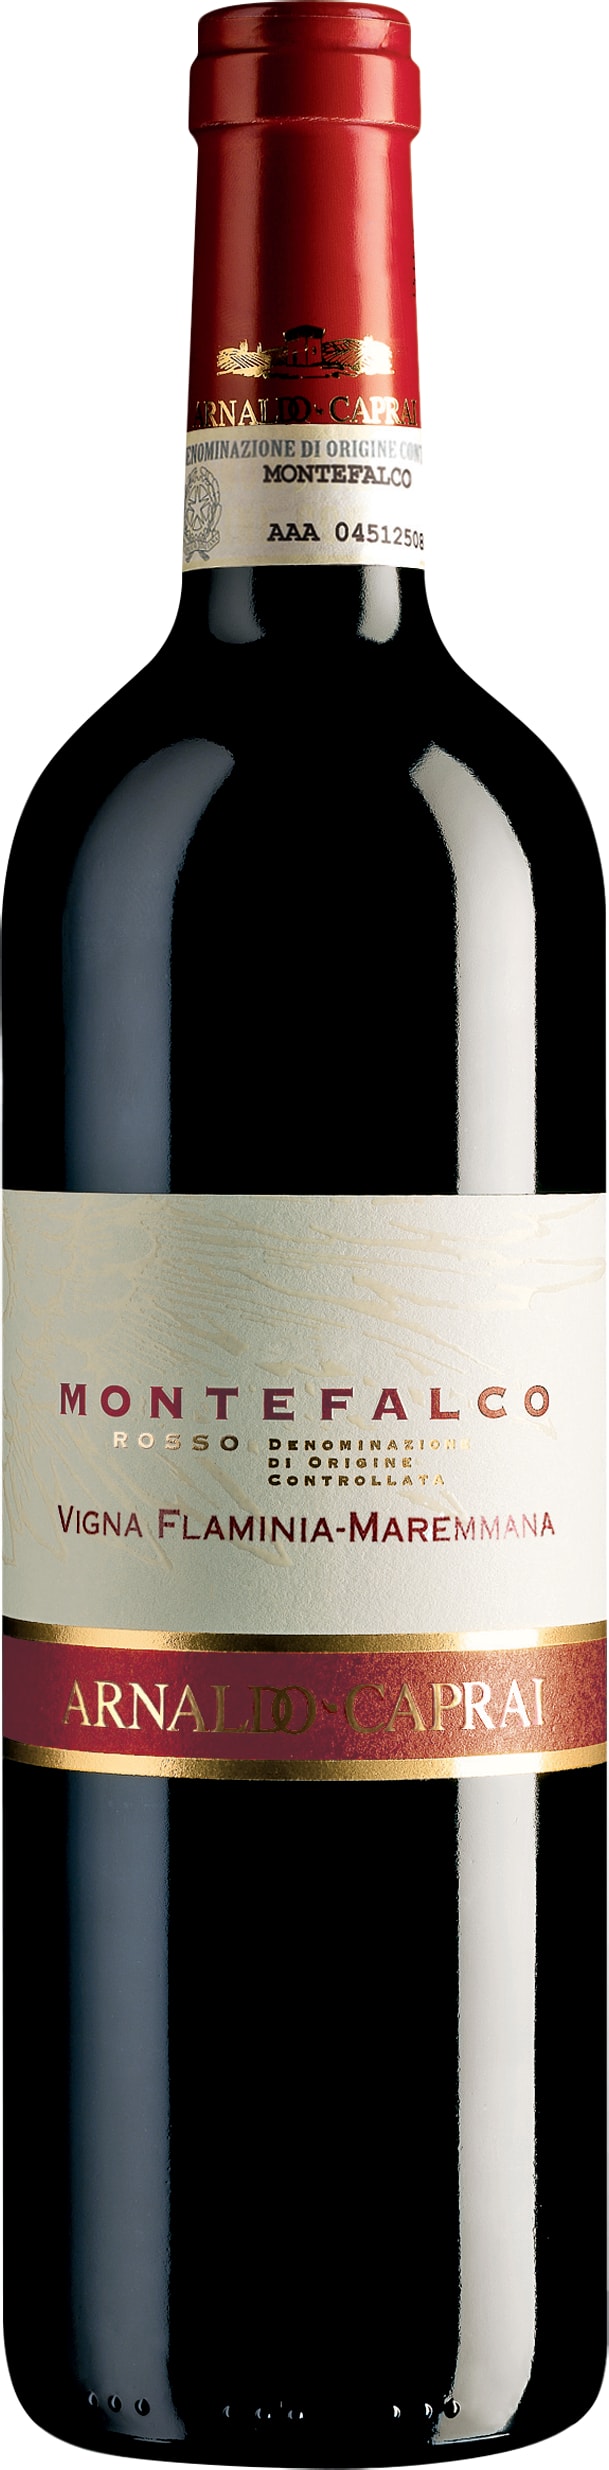 Arnaldo Caprai Montefalco Rosso Vigna Flamina 2019 75cl - Buy Arnaldo Caprai Wines from GREAT WINES DIRECT wine shop